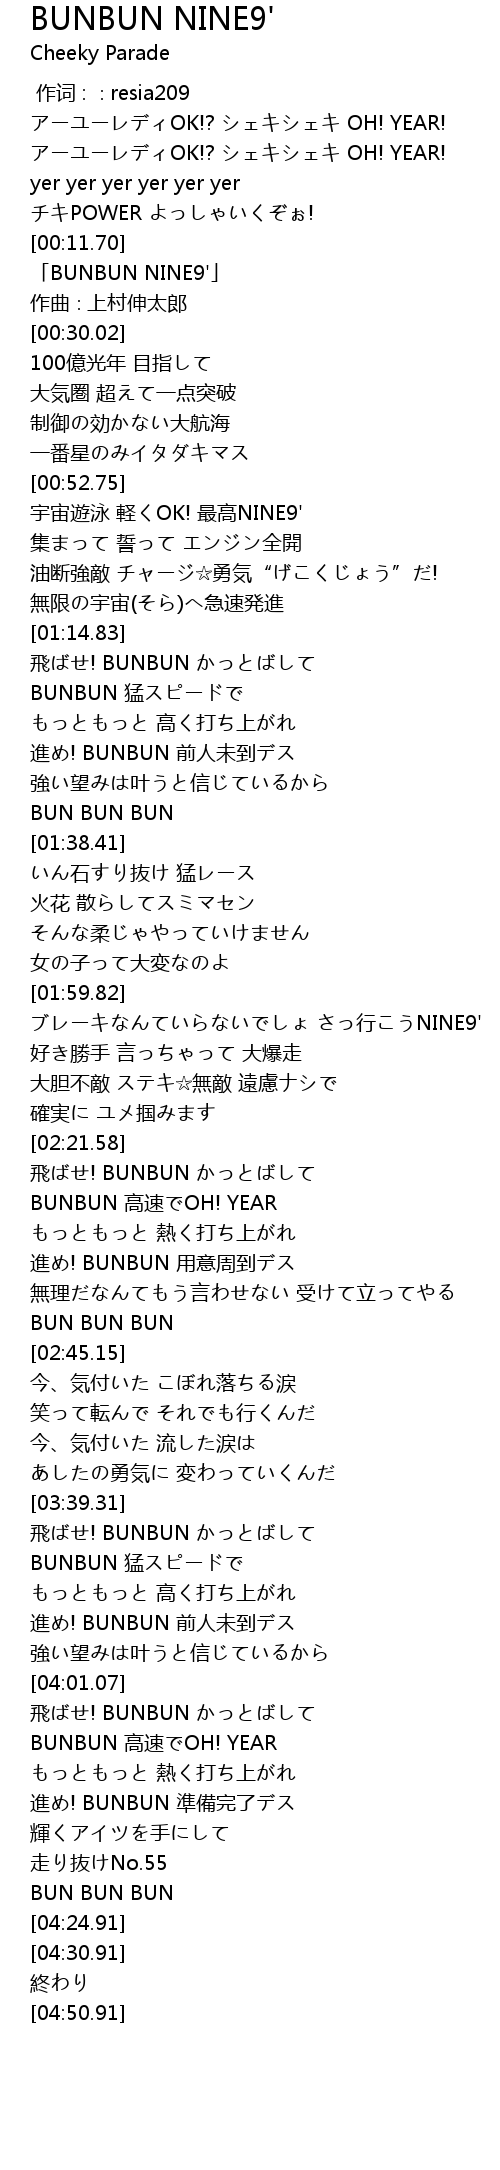 Bunbun Nine9 Lyrics Follow Lyrics